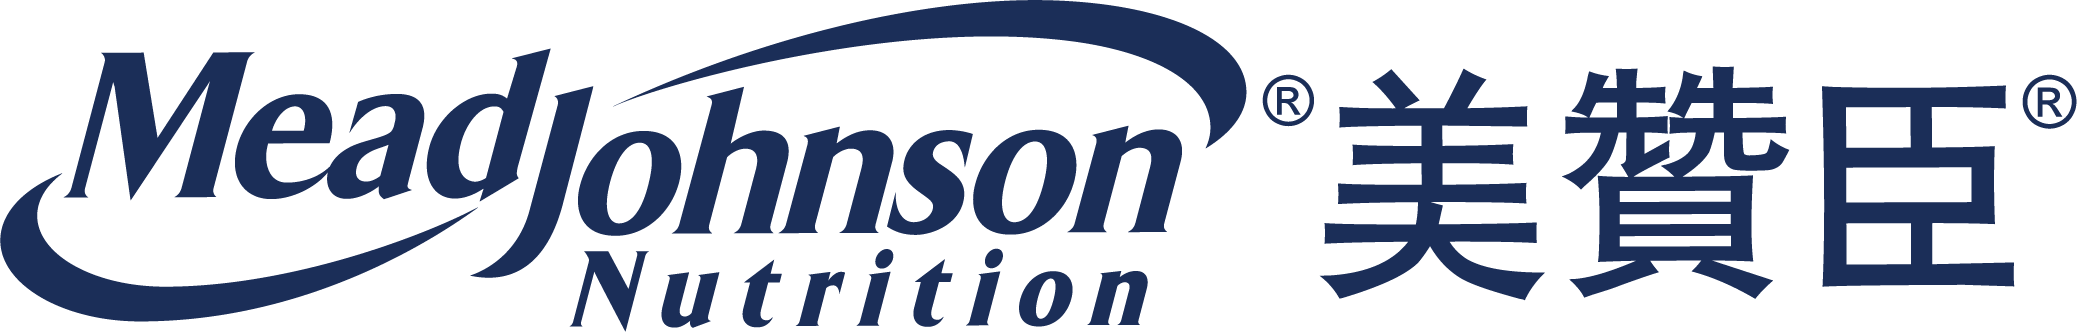 Mead Johnson Nutrition_logo